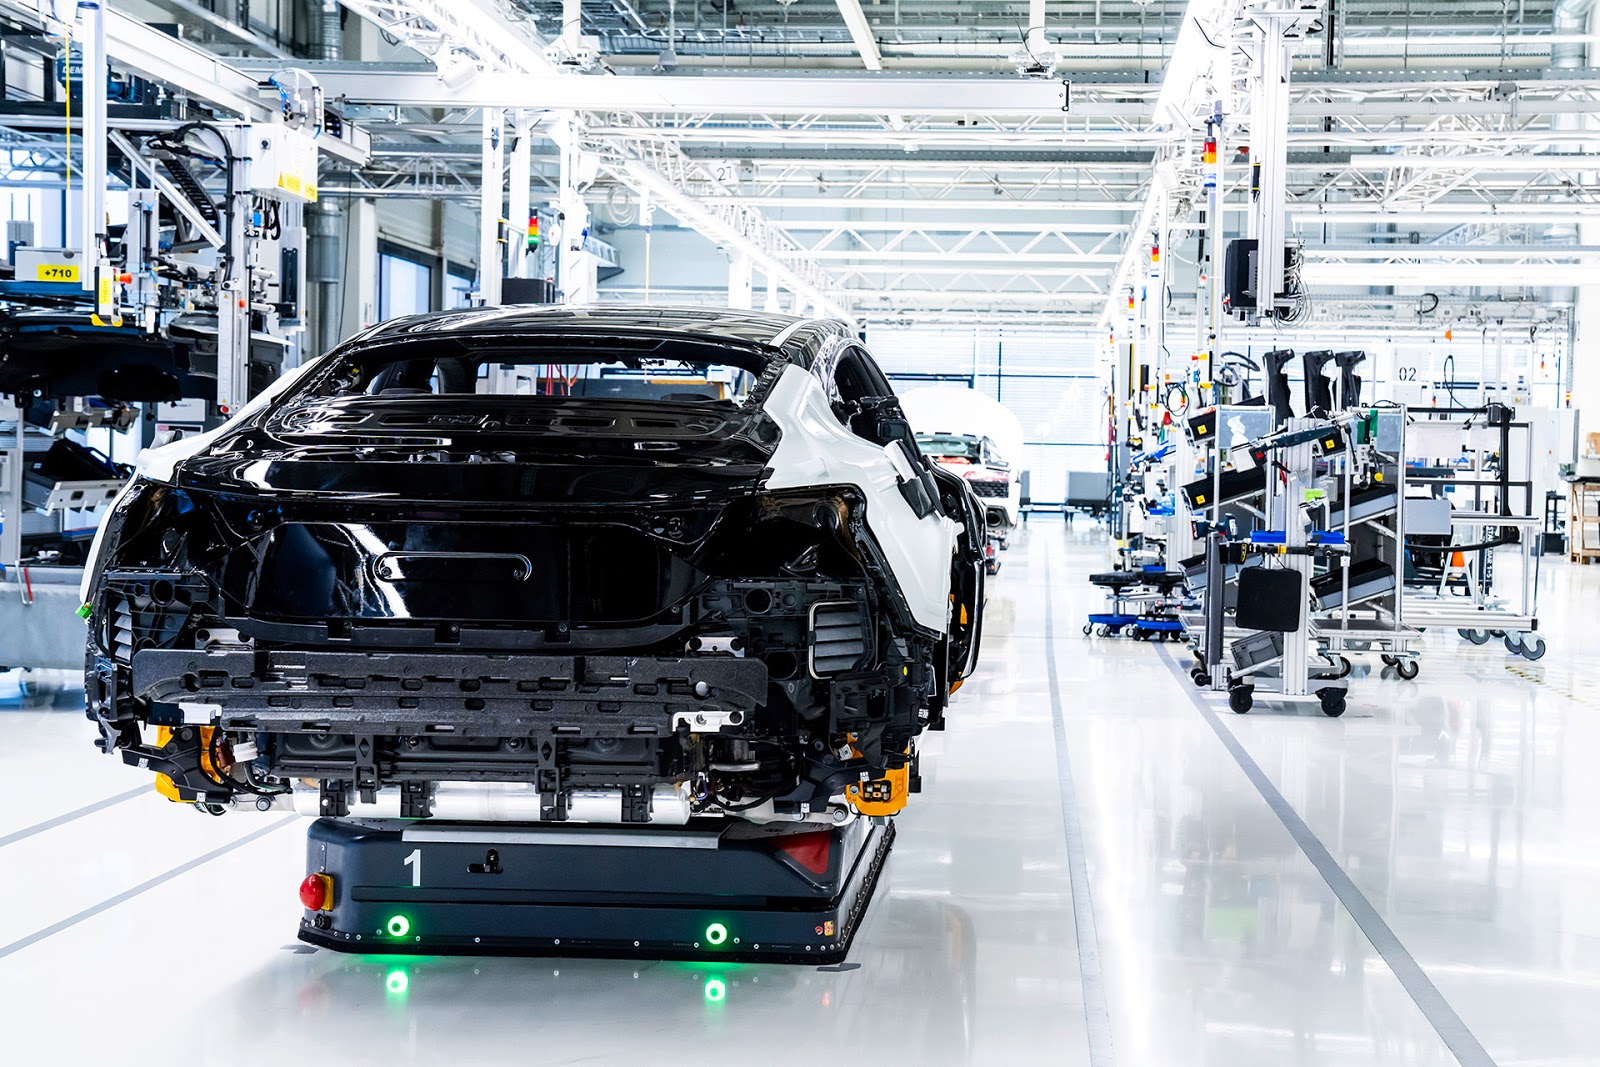 AUDI2B 2B25CE259525CE259D25CE259125CE25A125CE259E25CE25972B25CE25A025CE259125CE25A125CE259125CE259325CE25A925CE259325CE259725CE25A32B25CE25A425CE259F25CE25A52BE TRON2BGT 5 Audi : Ξεκινάει η παραγωγή του e-tron GT